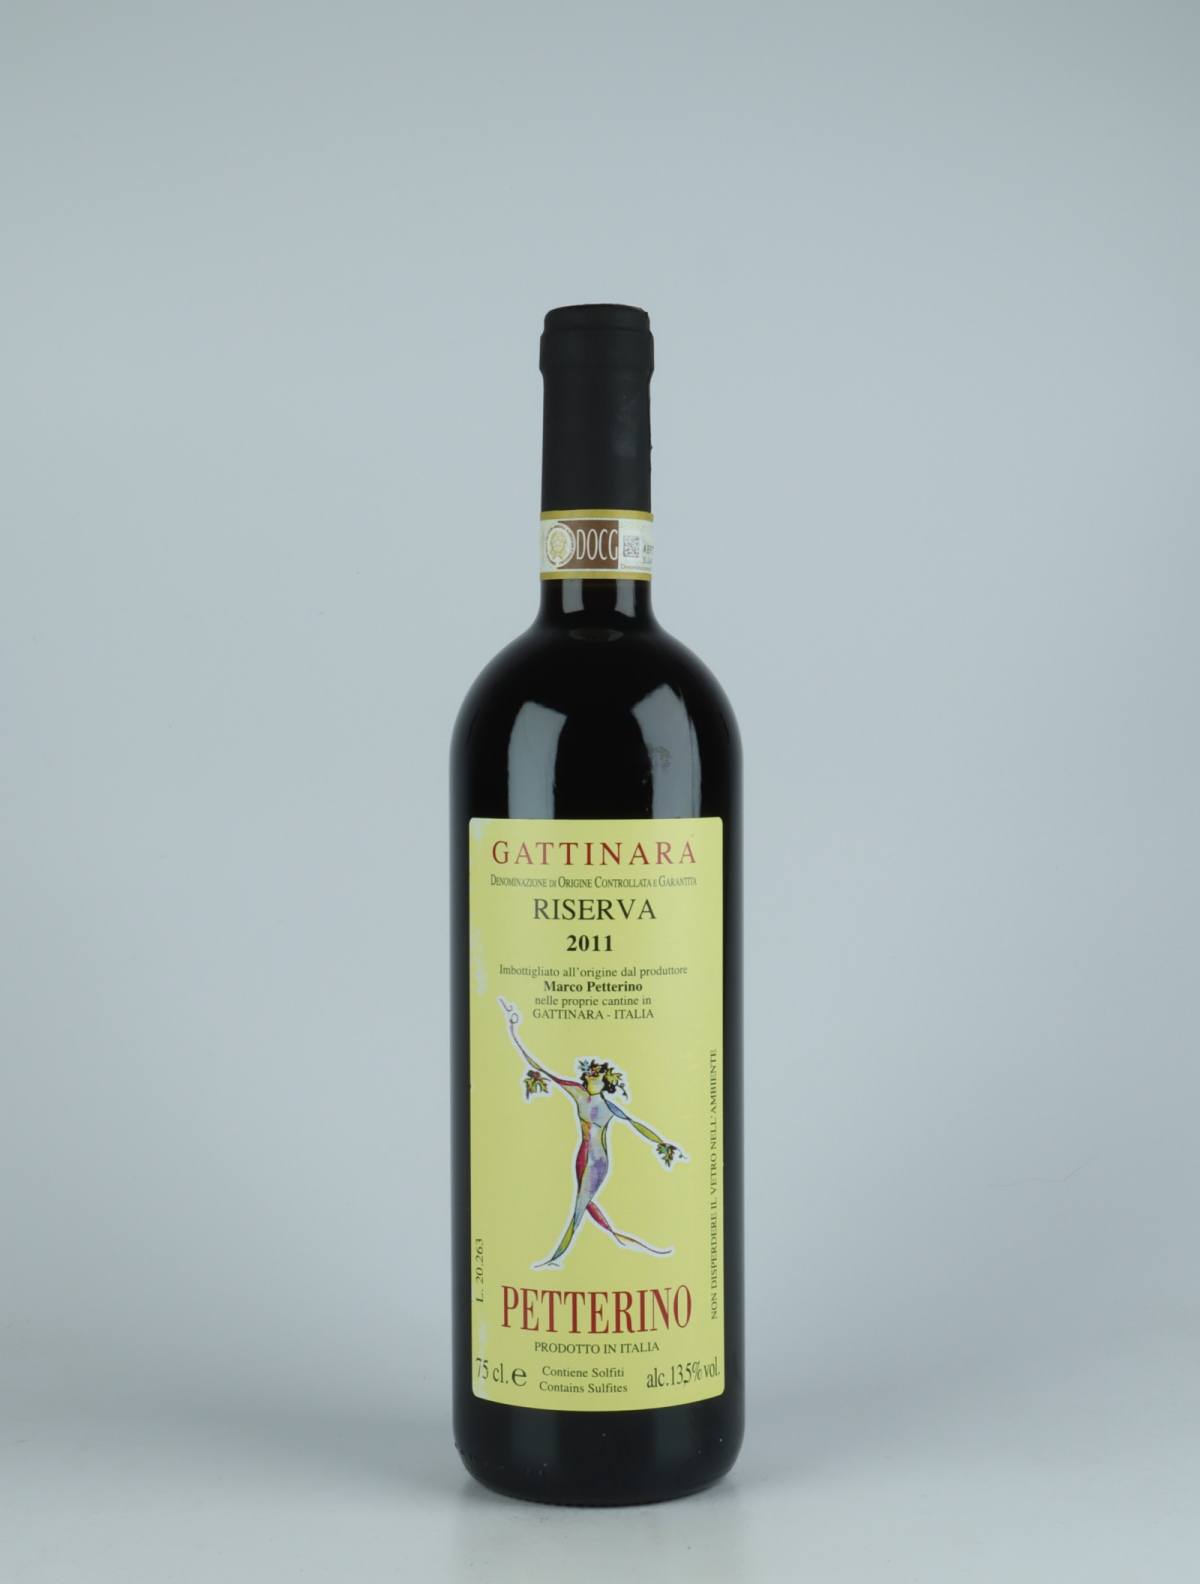 A bottle 2011 Gattinara Riserva Red wine from Petterino, Piedmont in Italy